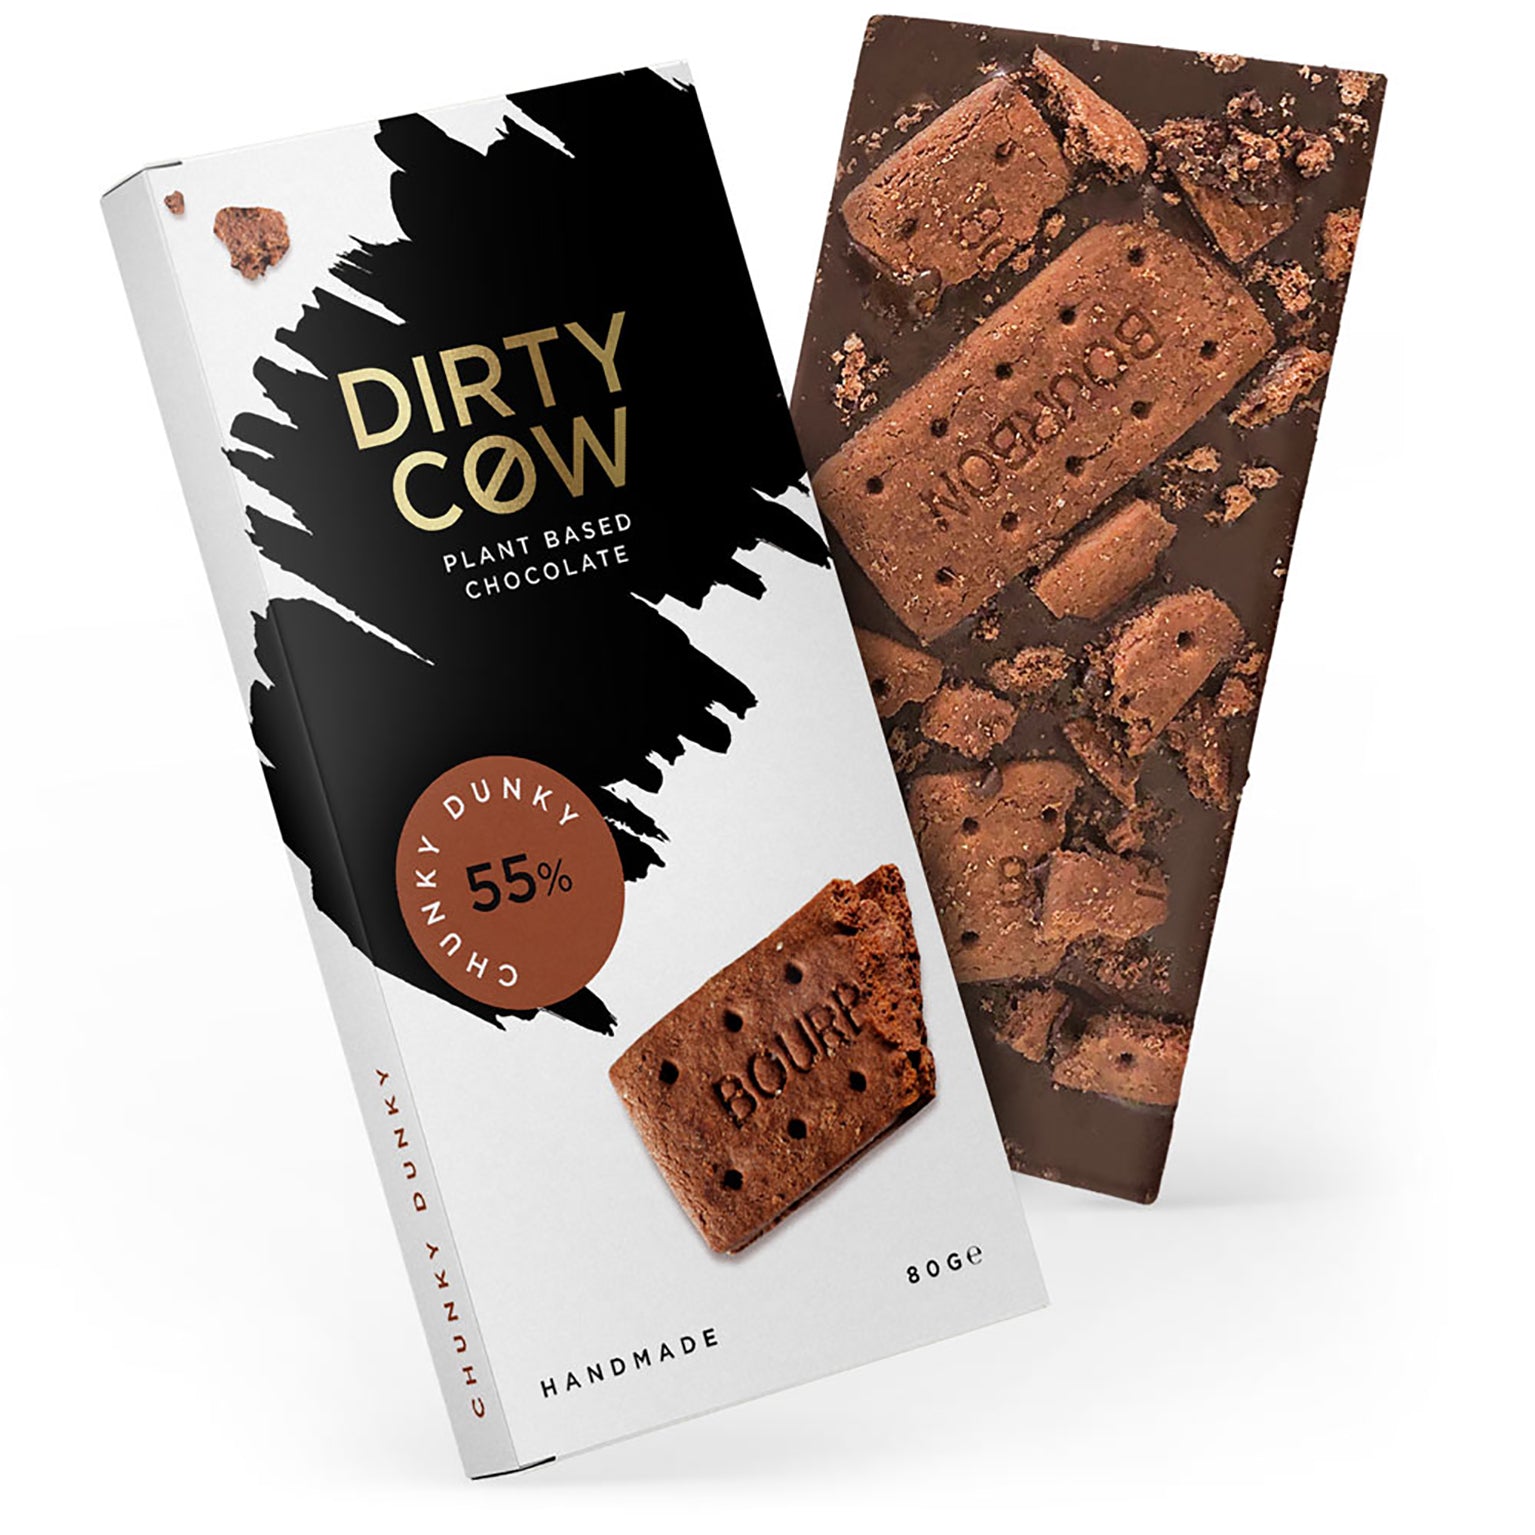 Dirty Cow Chunky Dunky Plant Based Chocolate Bar (12x12x80g)